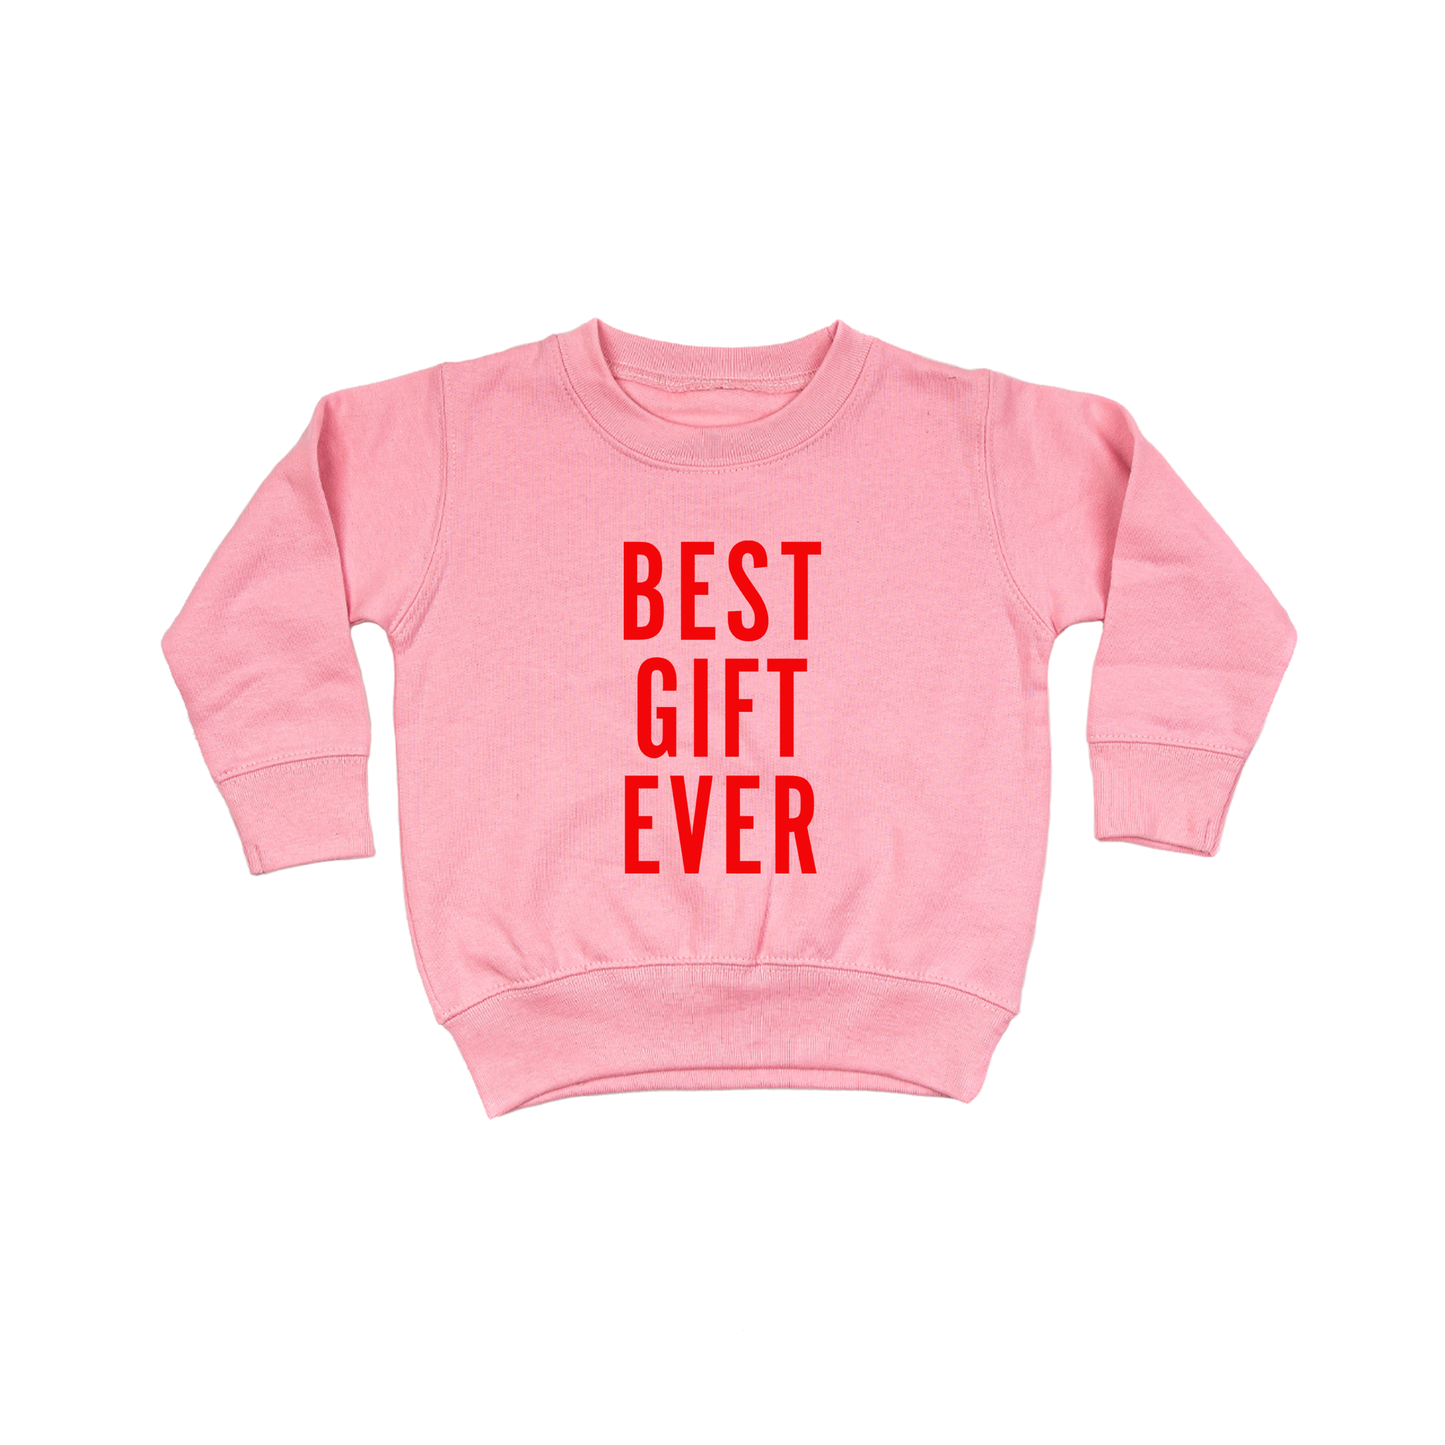 Best Gift Ever (Red) - Kids Sweatshirt (Pink)